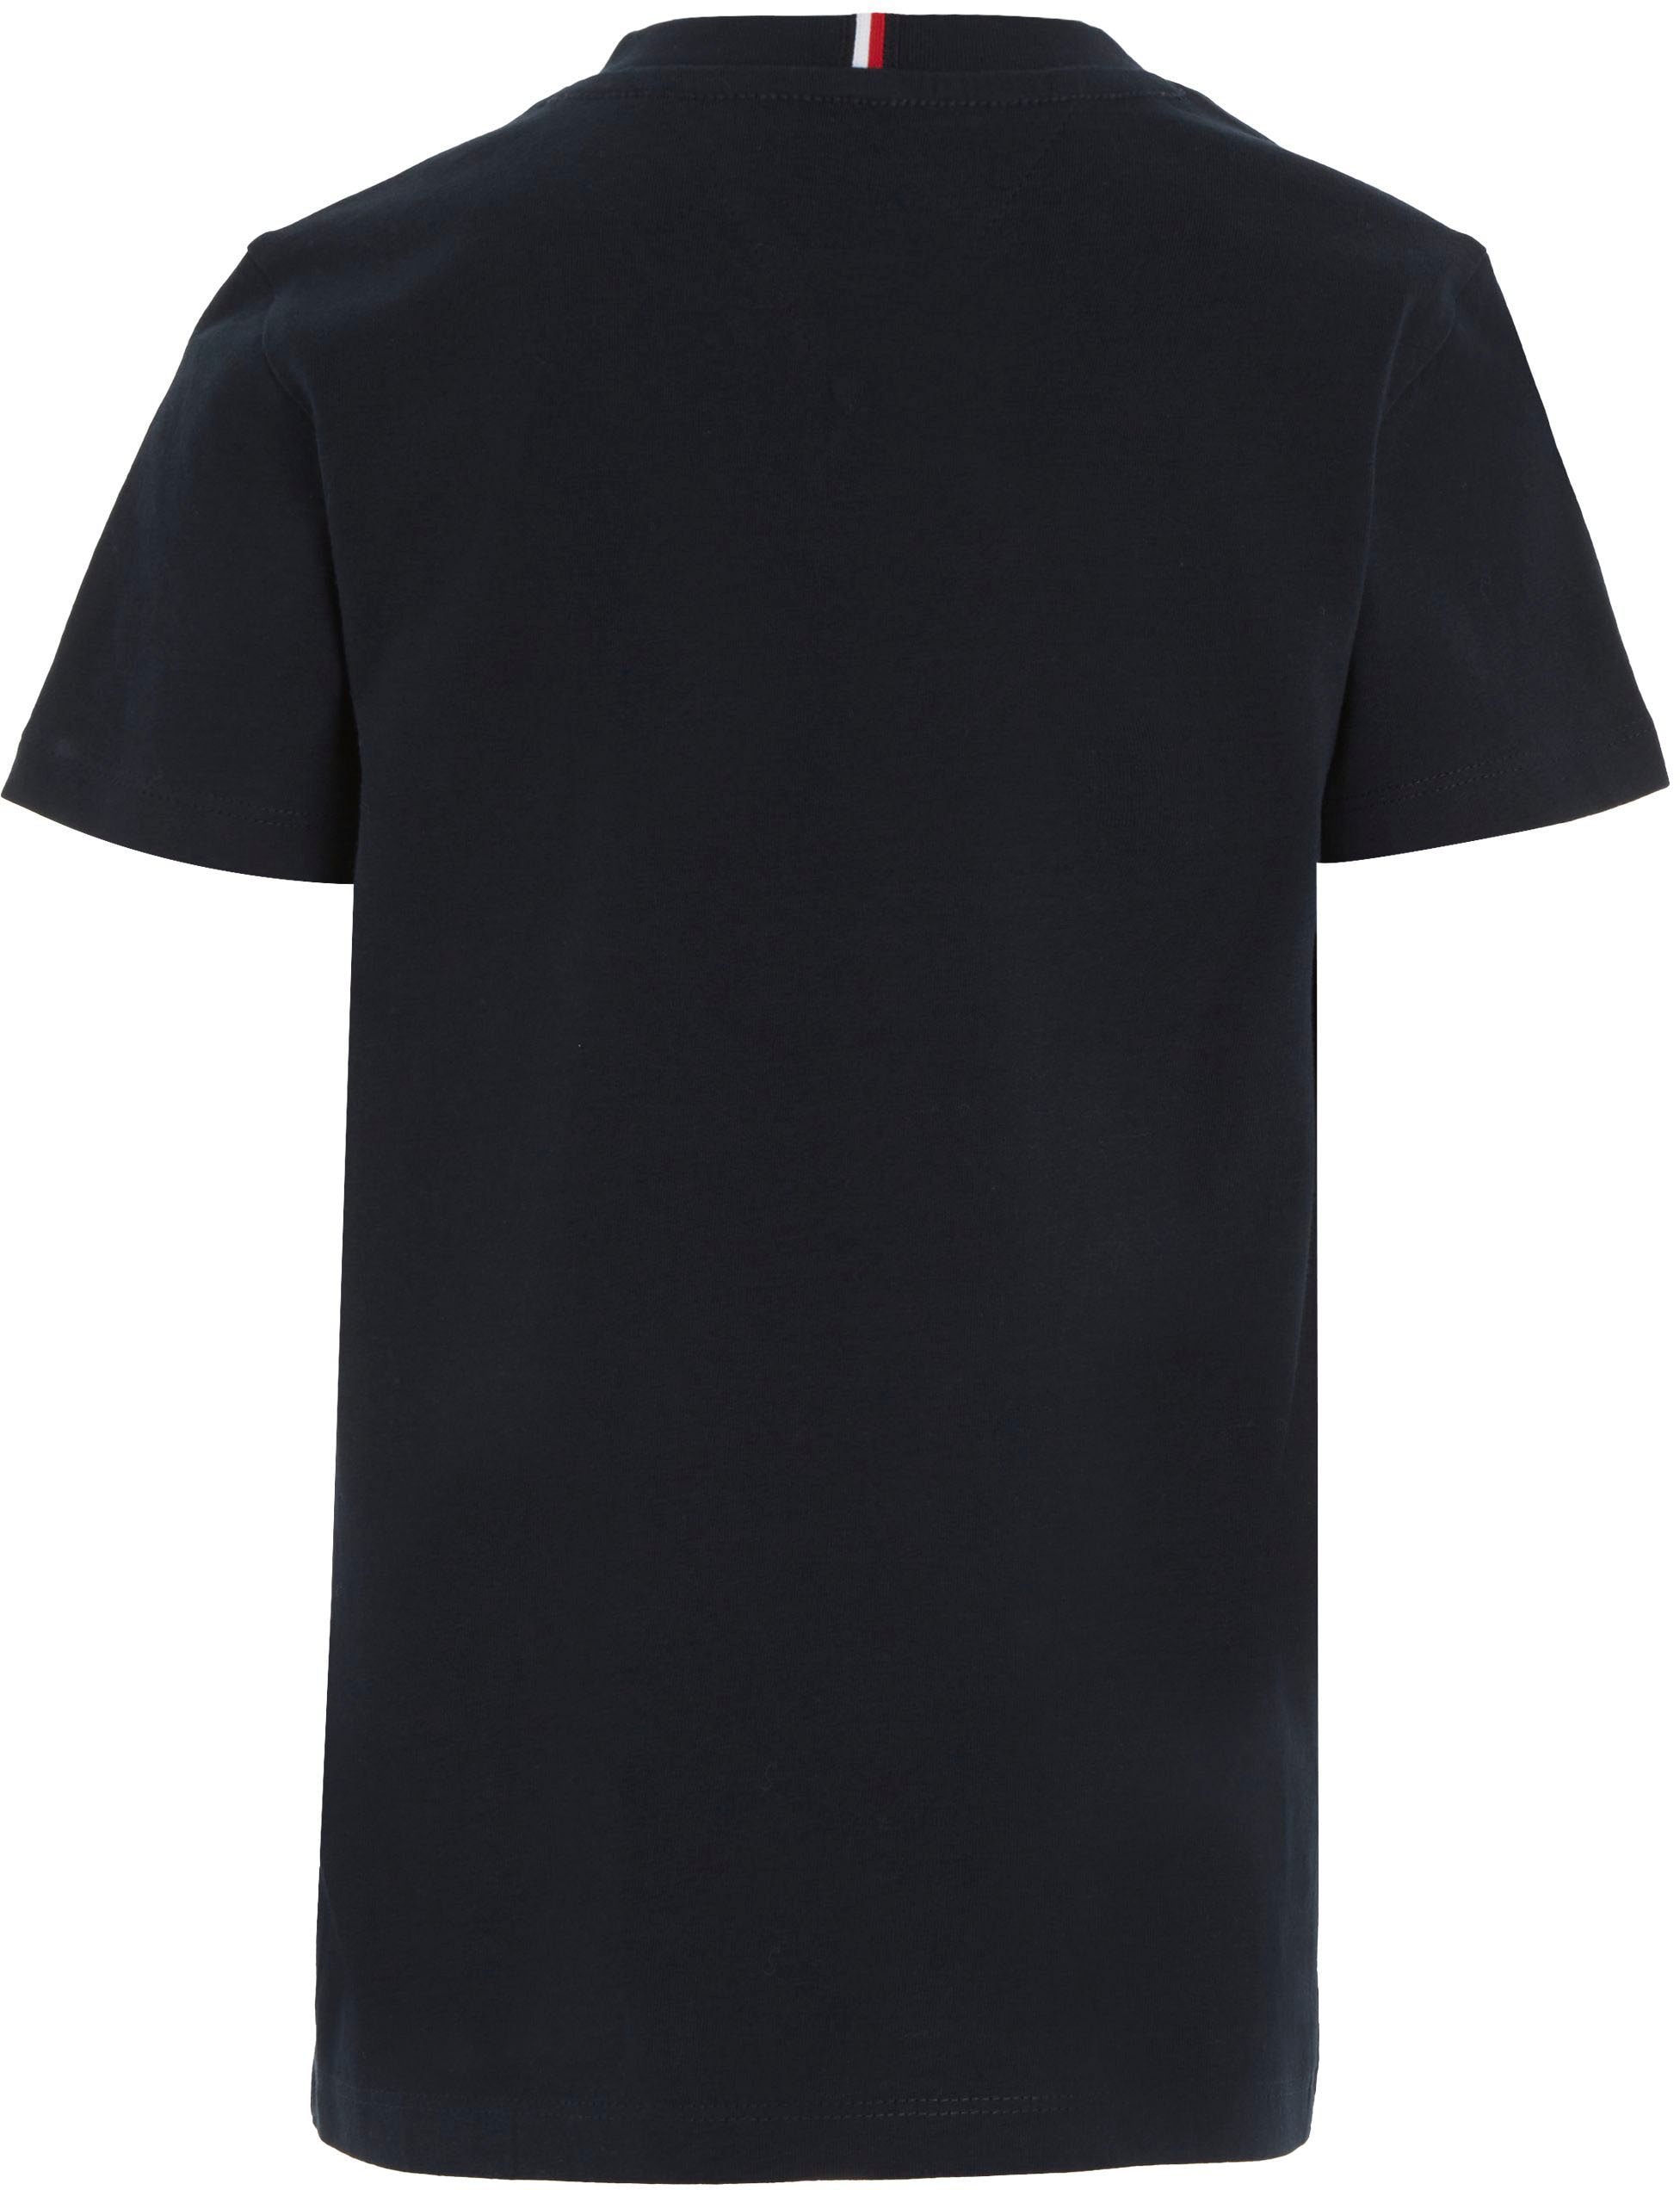 Tommy Hilfiger T-Shirt »TH LOGO TEE S/S«, mit grossem TH-Logo